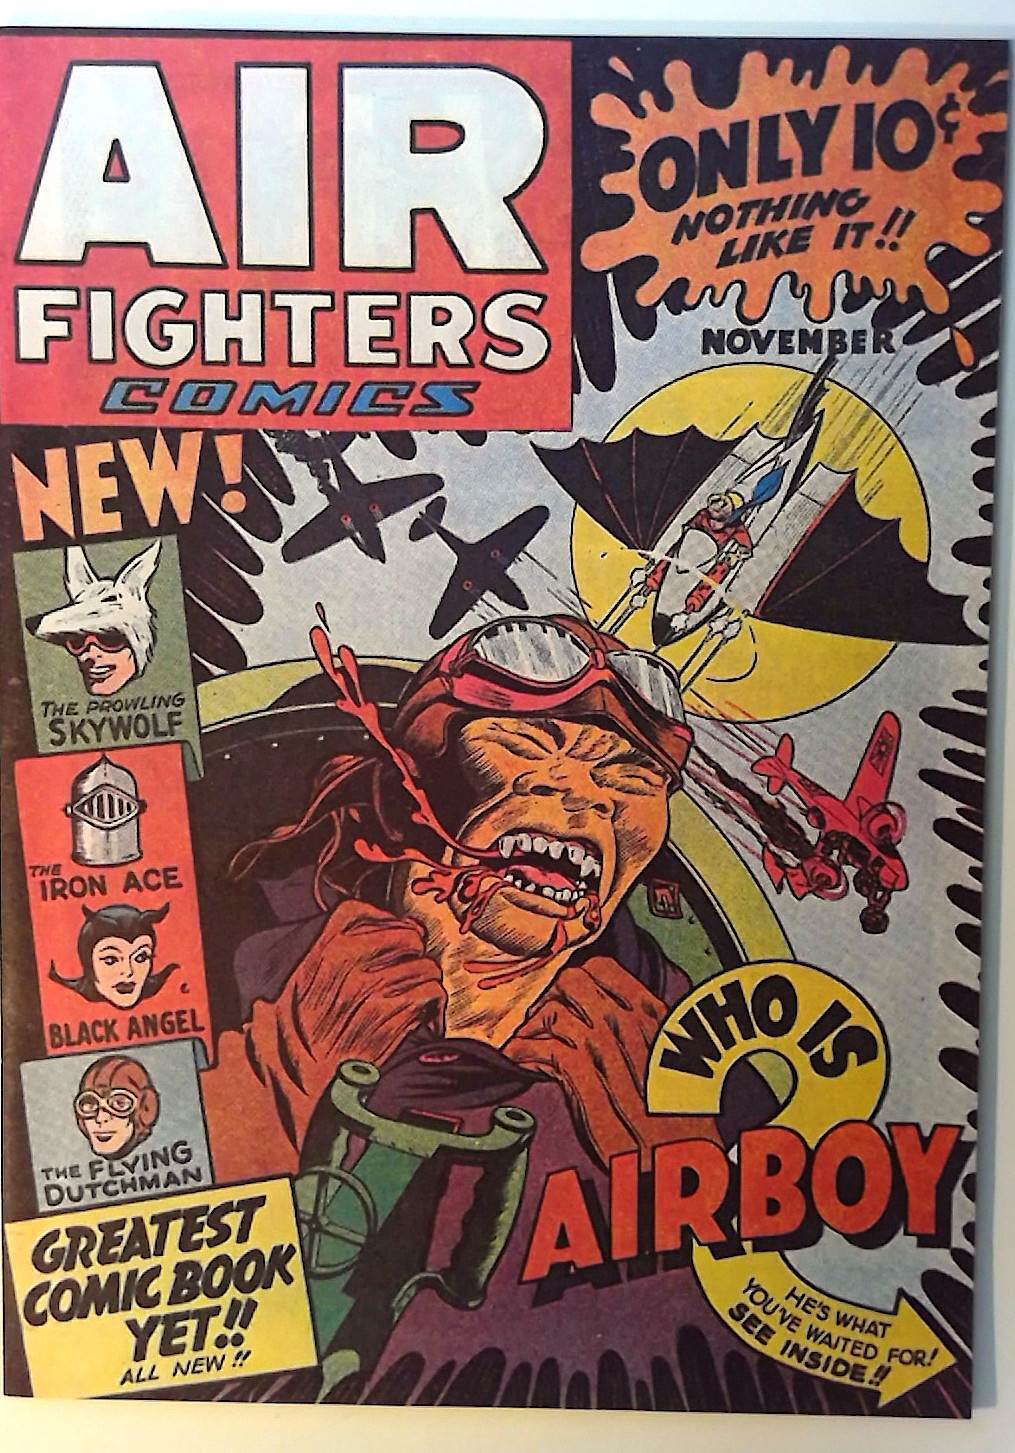 Air Fighters Comics Special Reprint Edition #2 Nostalgia, Inc. (1973) Comic Book